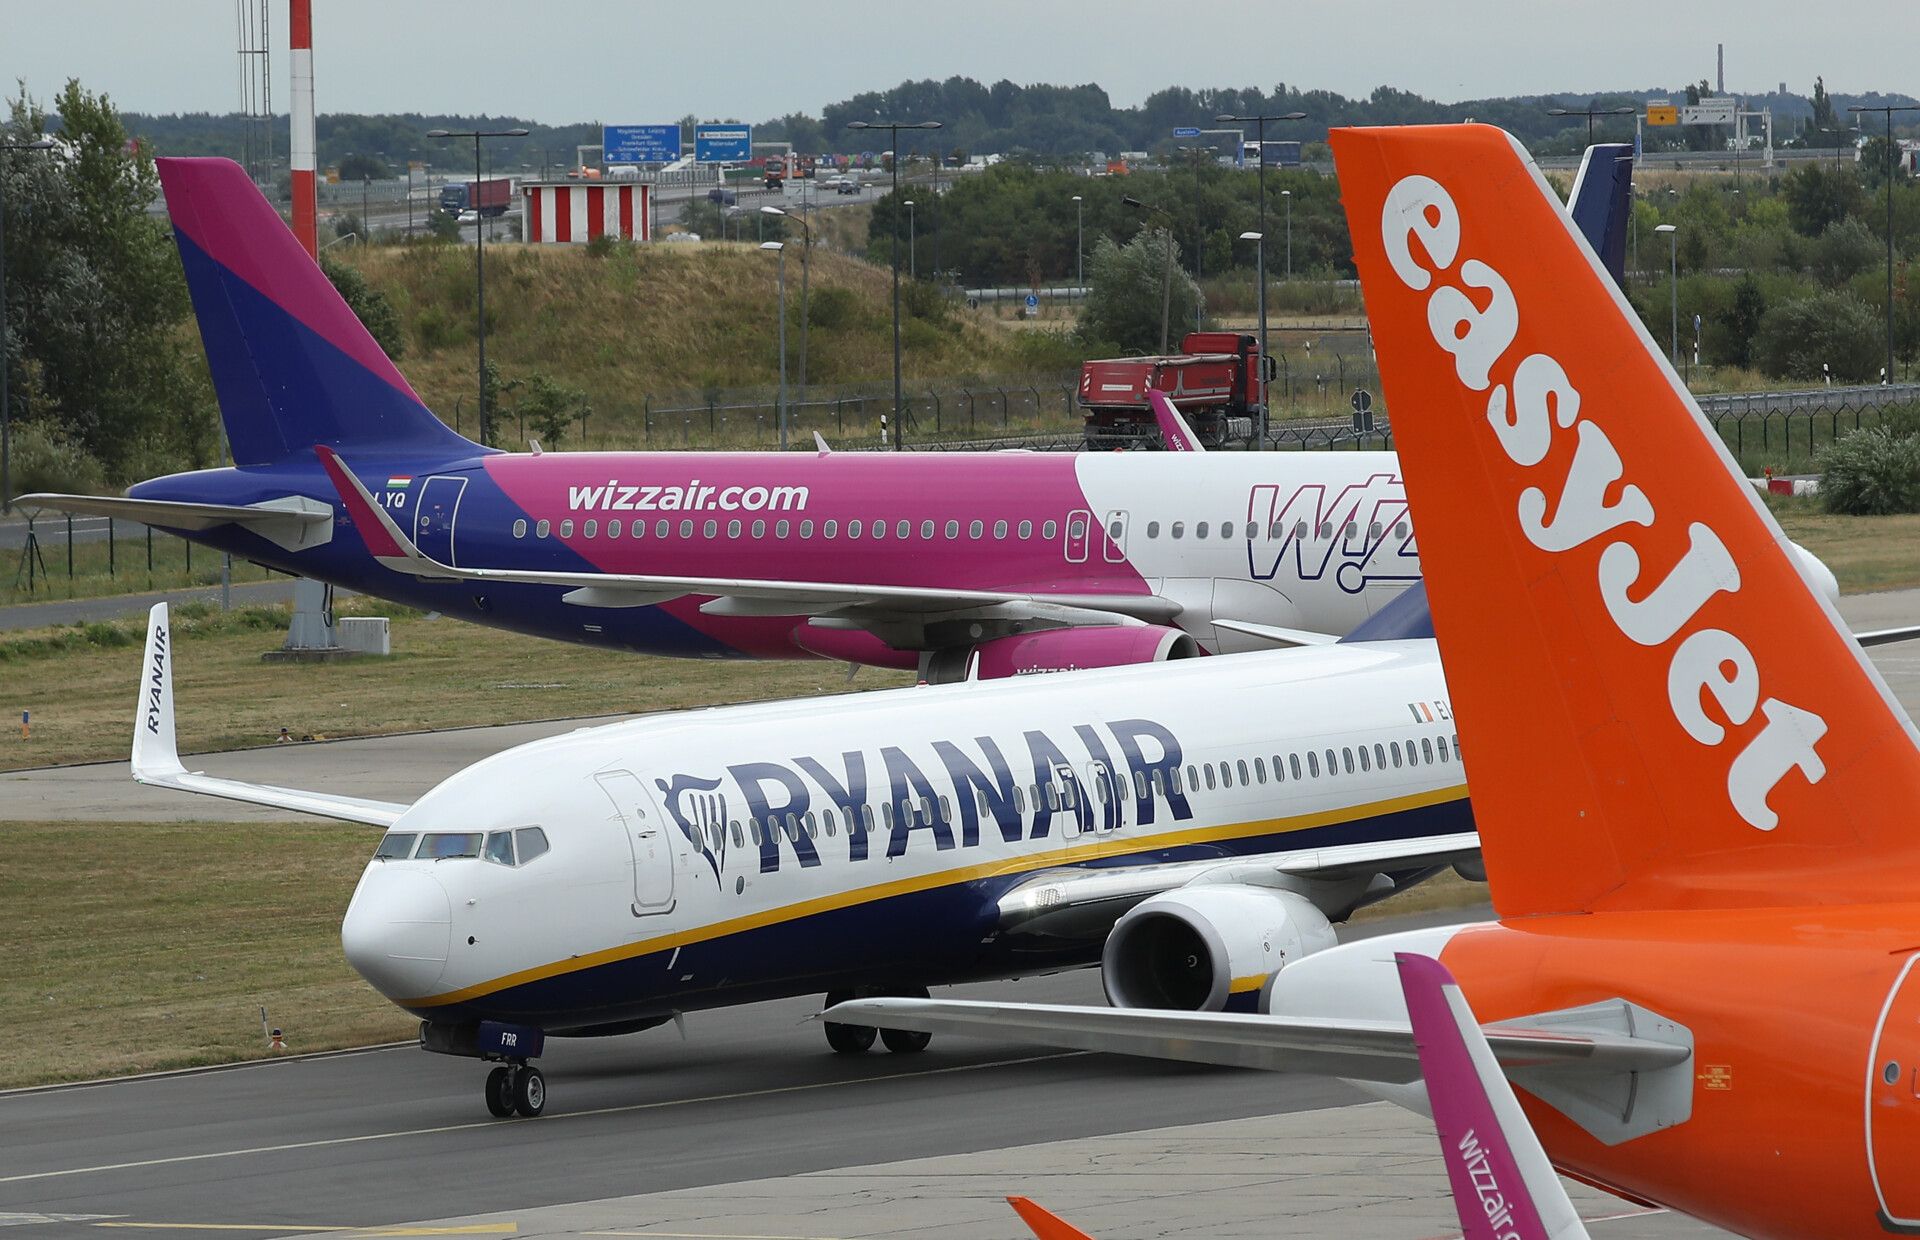 Ryanair Wizz Air & easyJet Aircraft